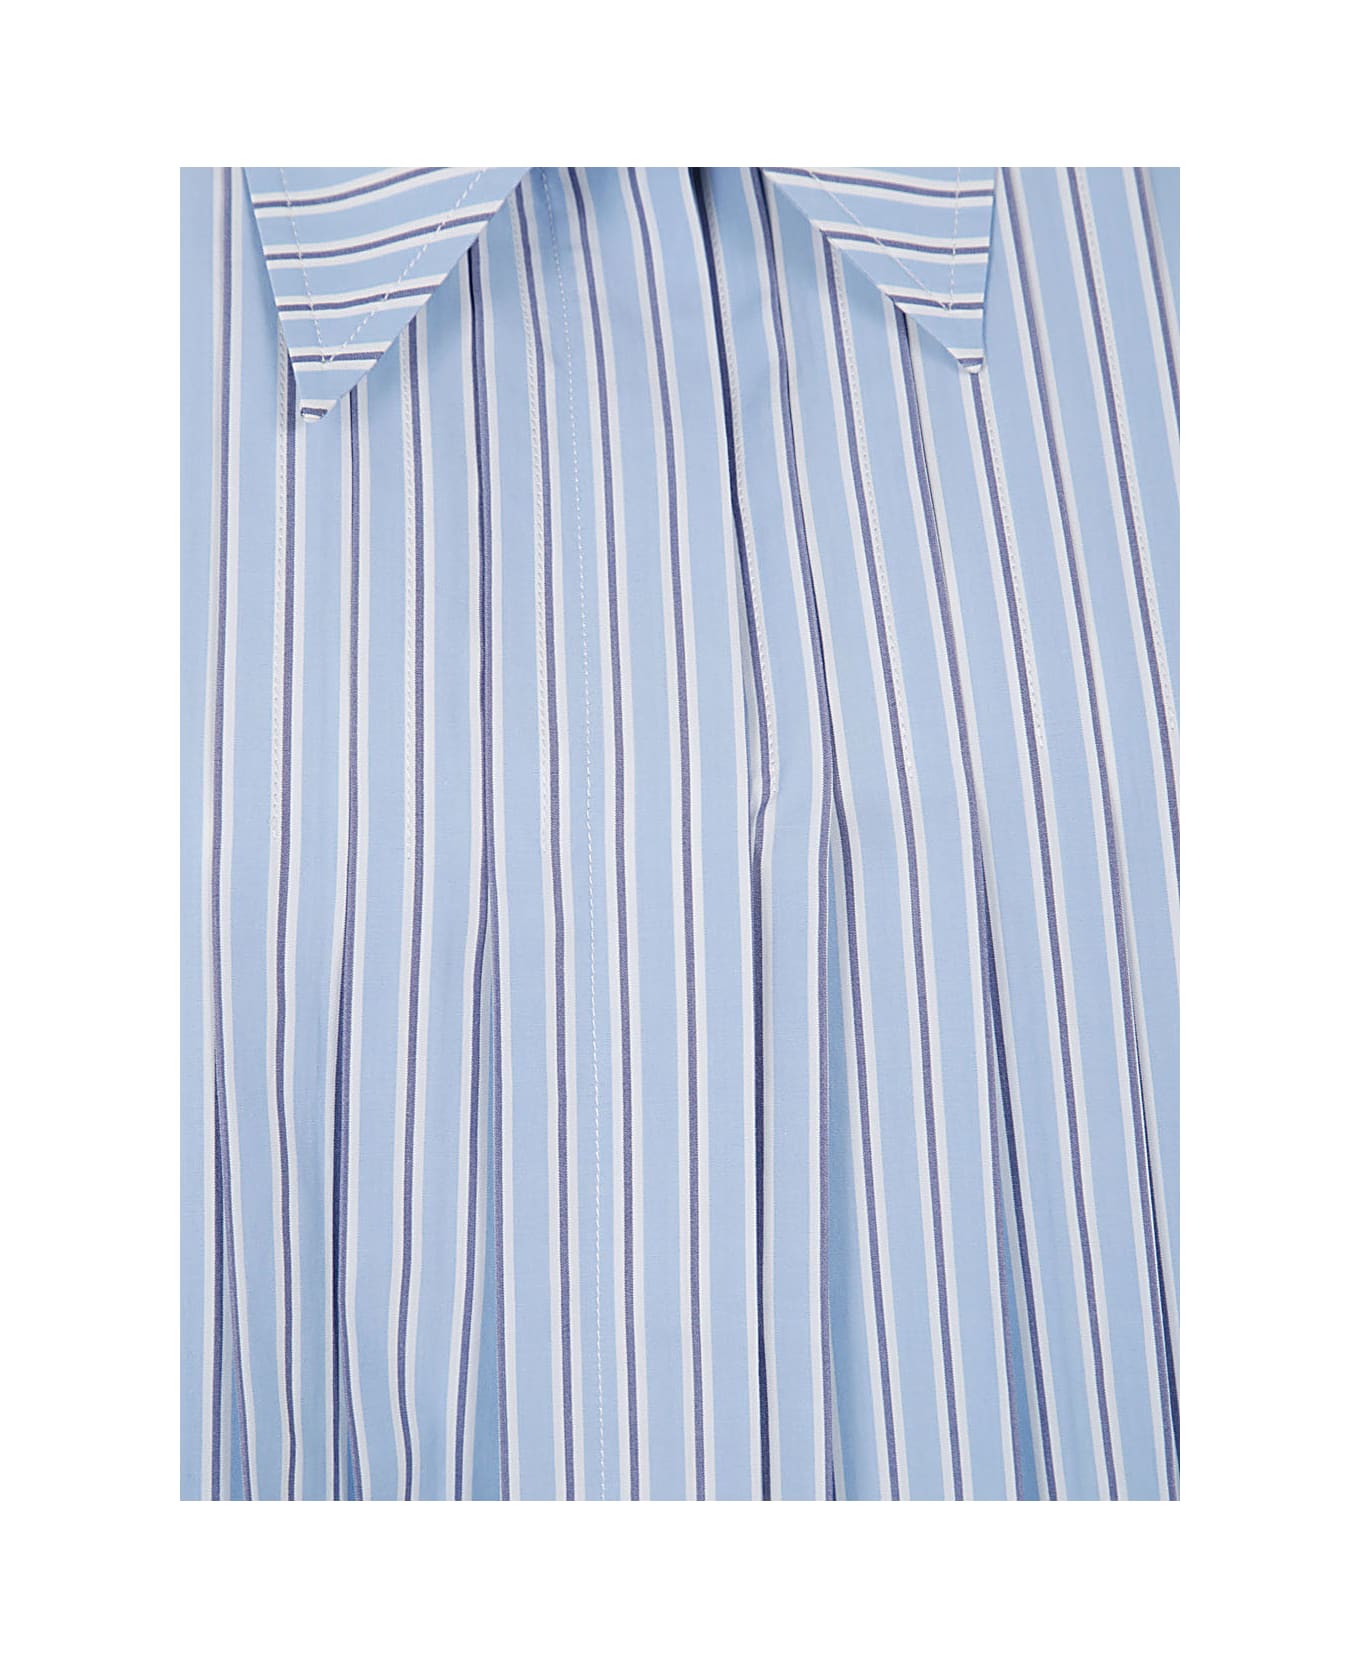 Alberta Ferretti Cropped Striped Shirt - Light Blue ブラウス